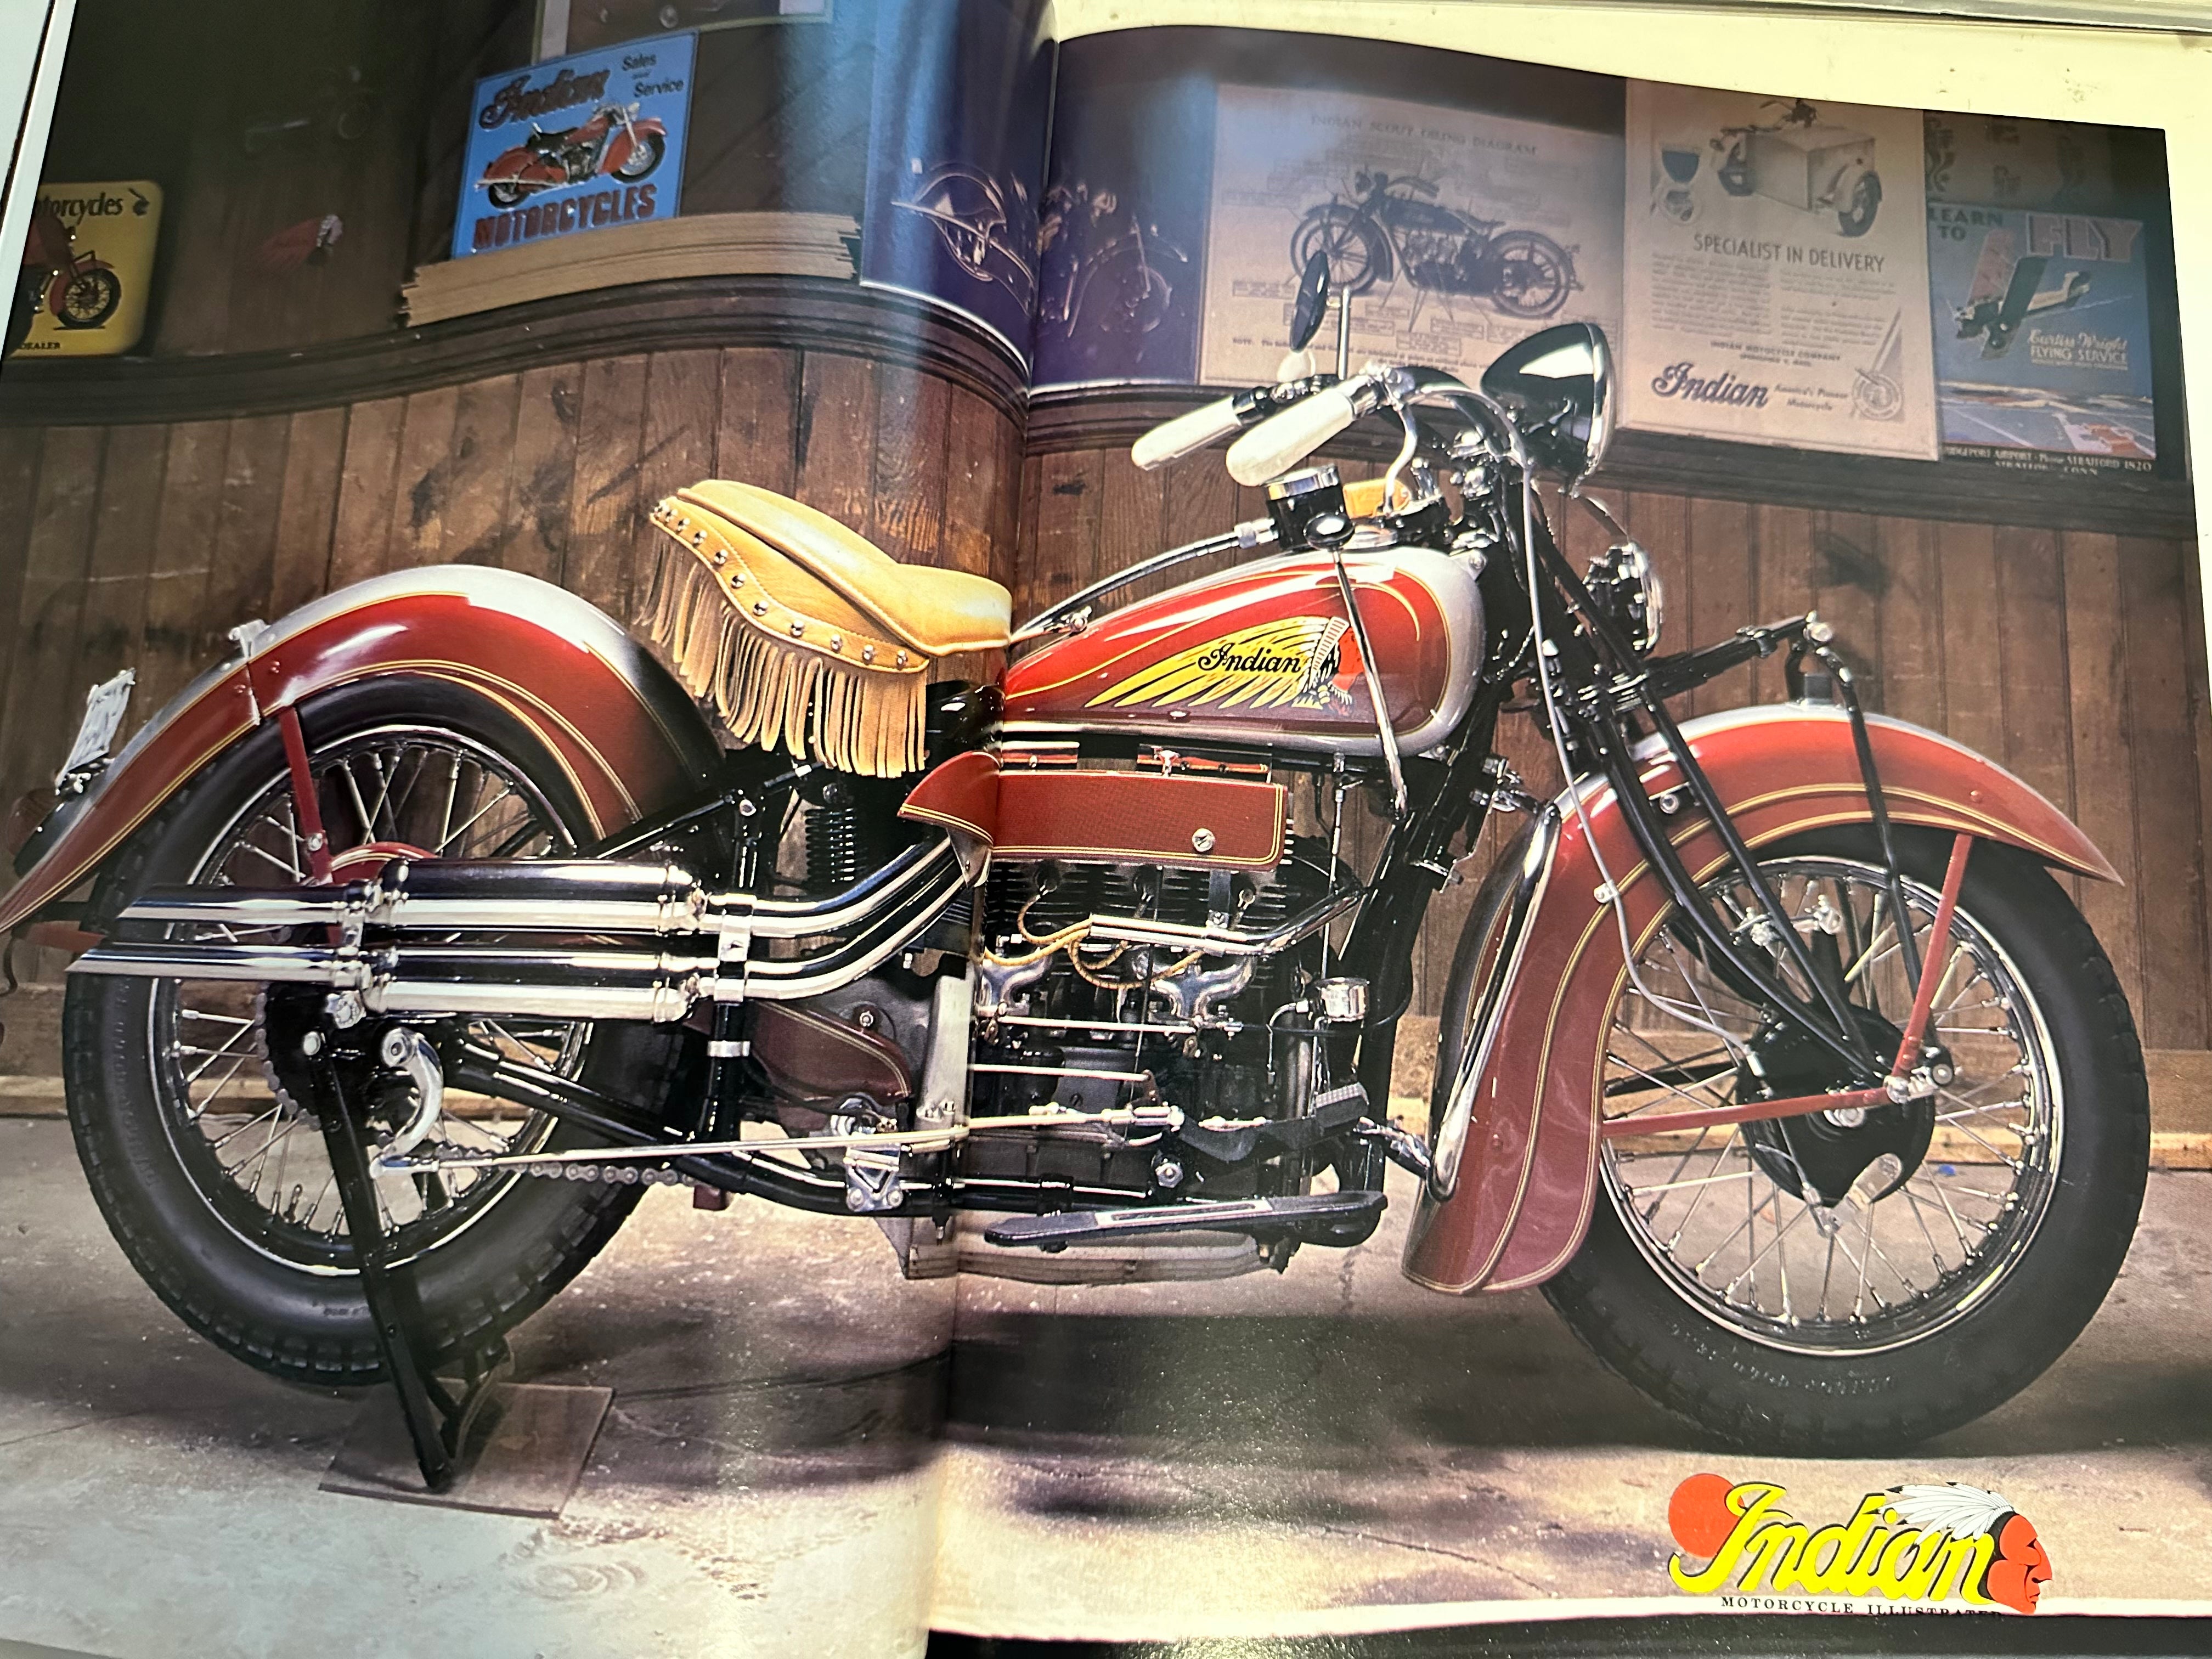 Indian Motorcycle #1 issue magazine 1993